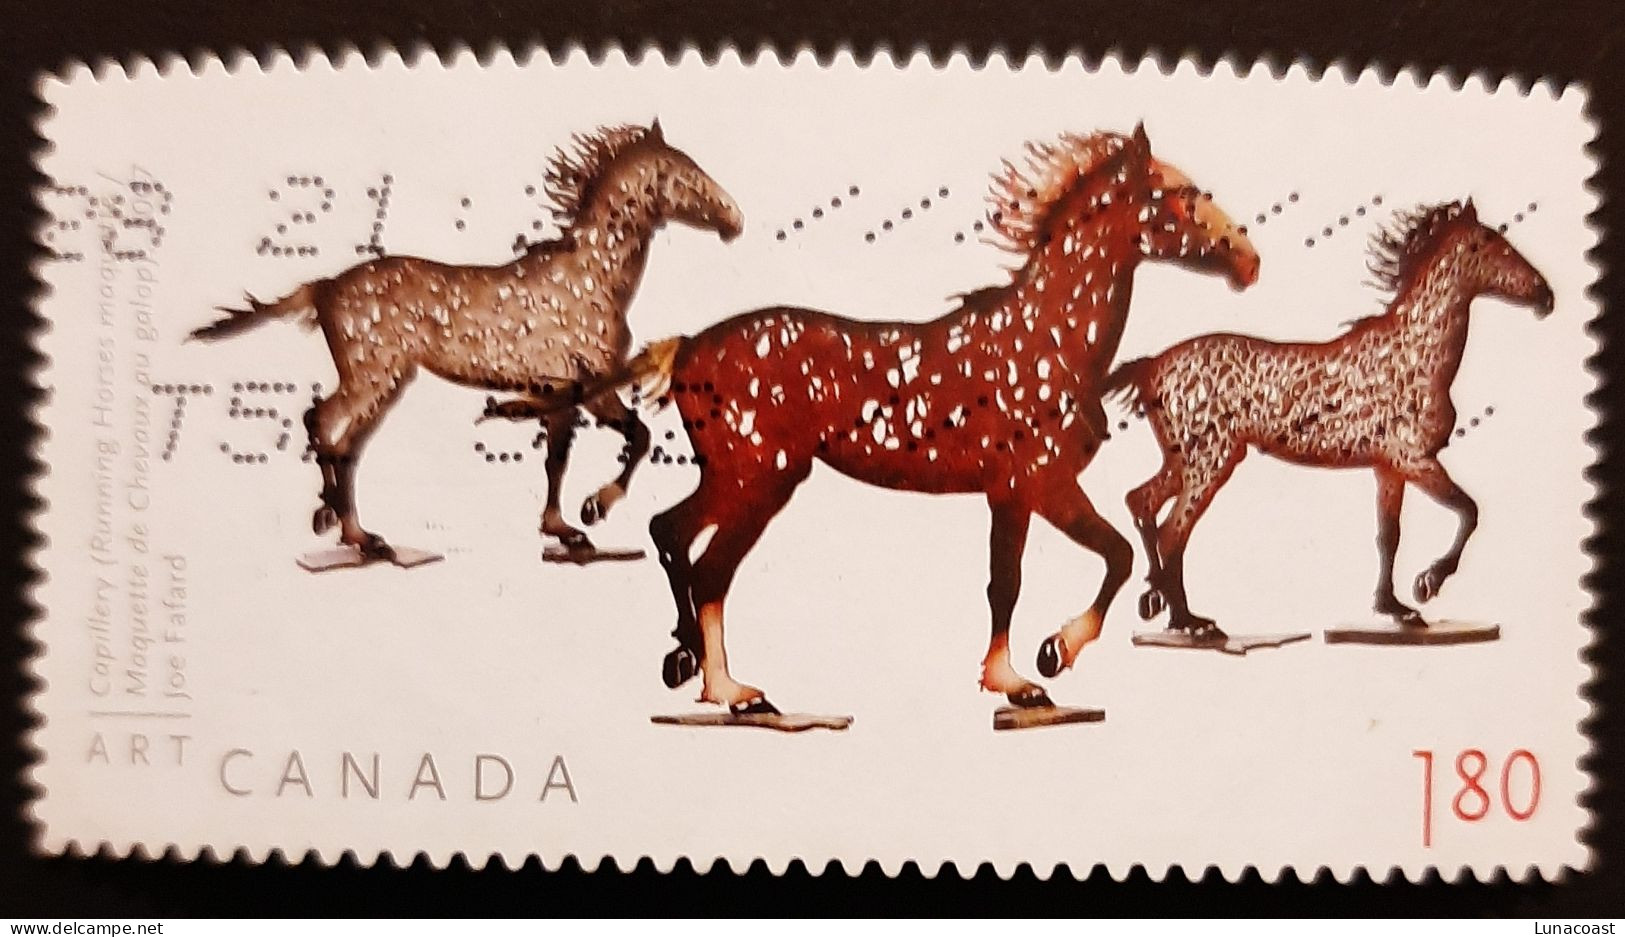 Canada 2012 USED  Sc 2525   1.80$  Horses - Gebraucht